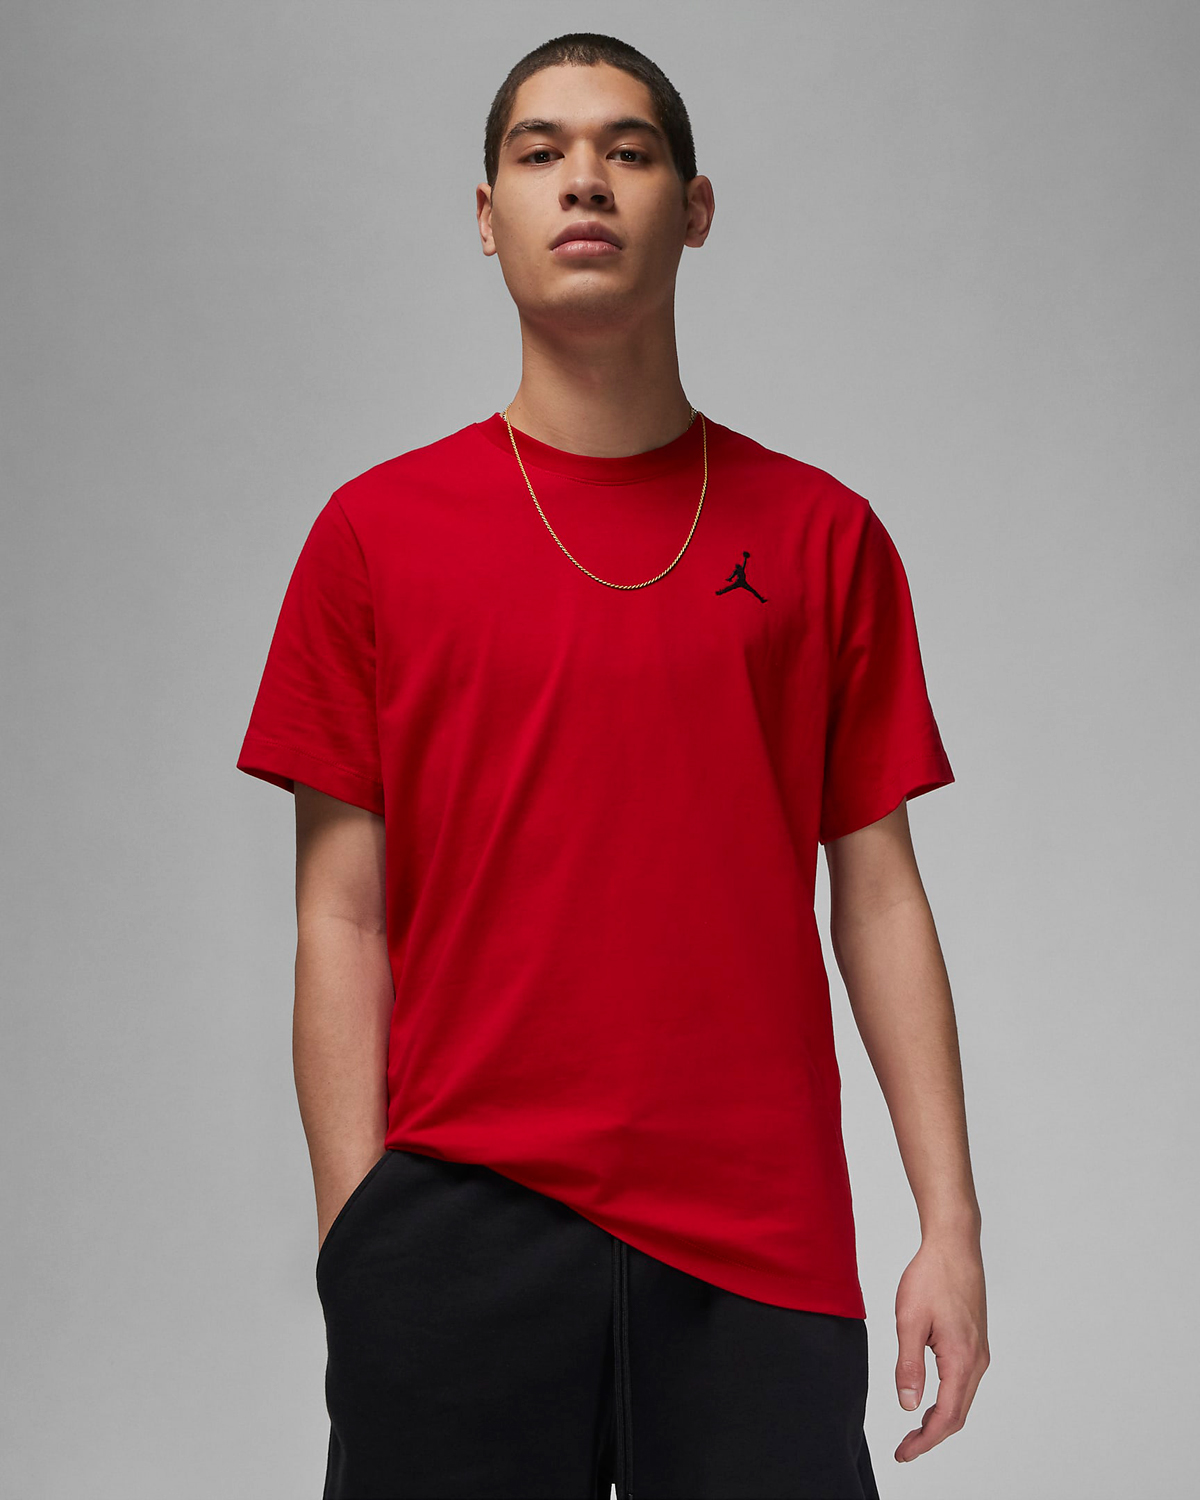 Jordan-Brand-Graphic-T-Shirt-Gym-Red-Black-1